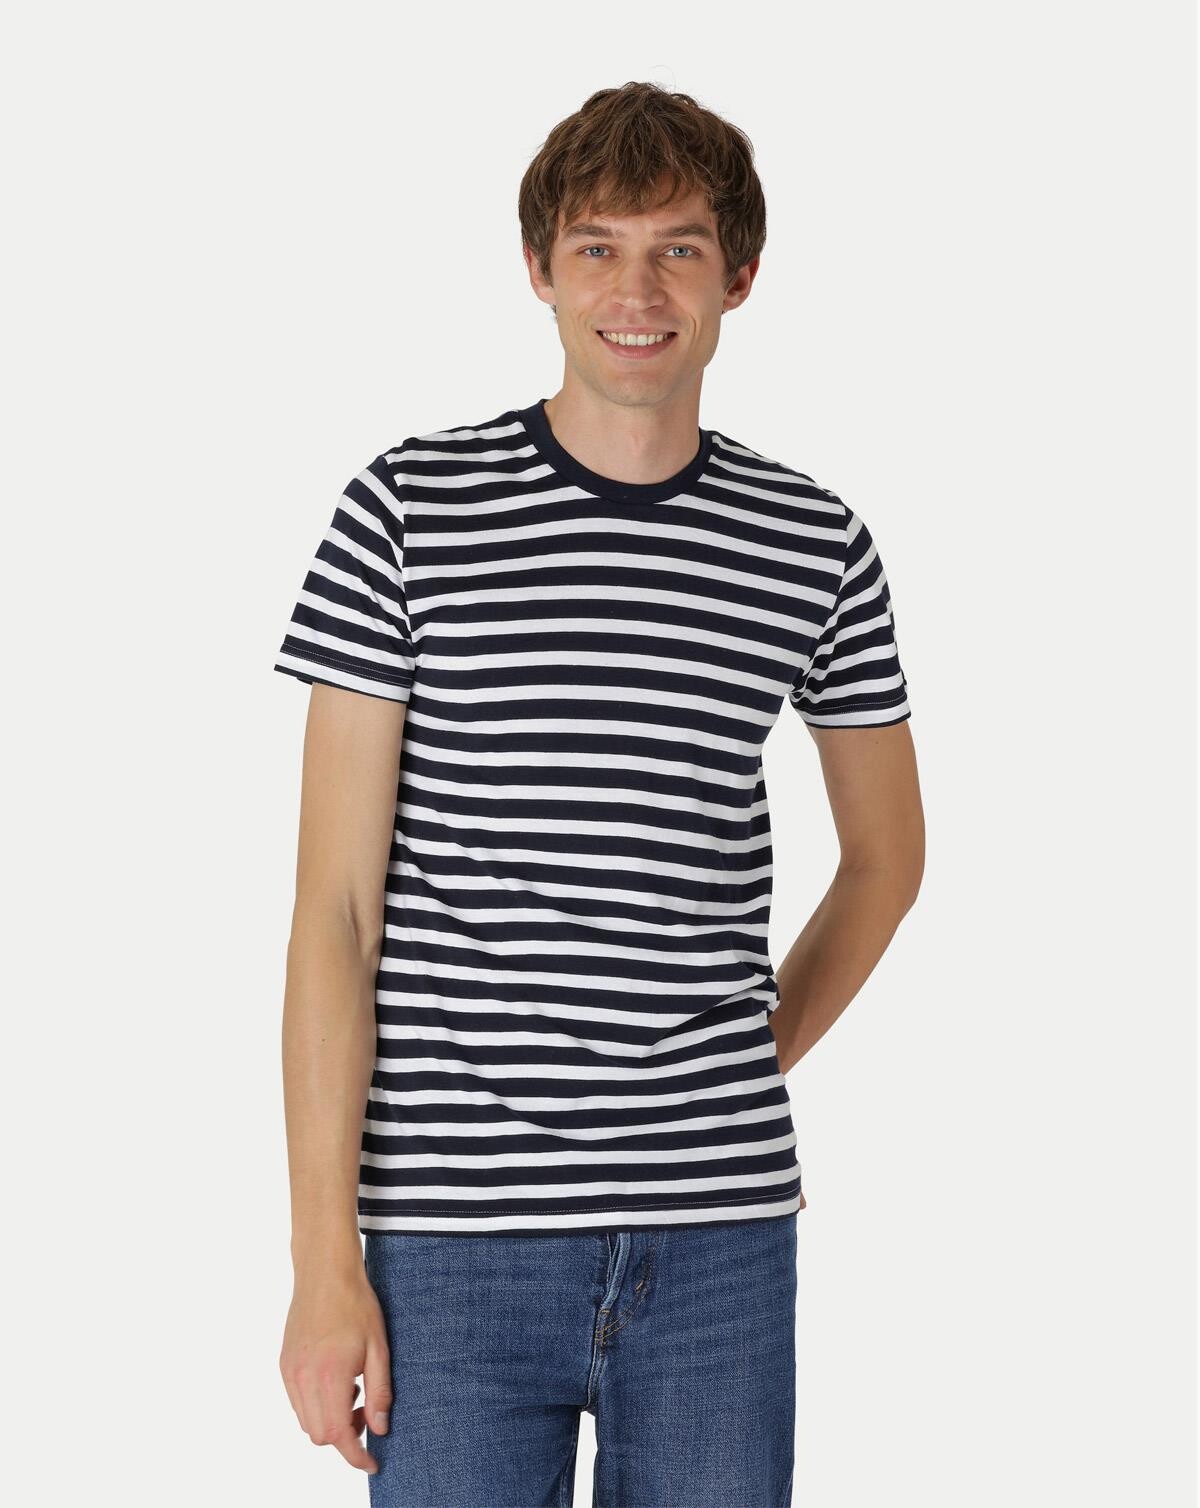 Neutral Økologisk T-shirt til - Tætsiddende (Blå / Hvid stribet, 3XL)